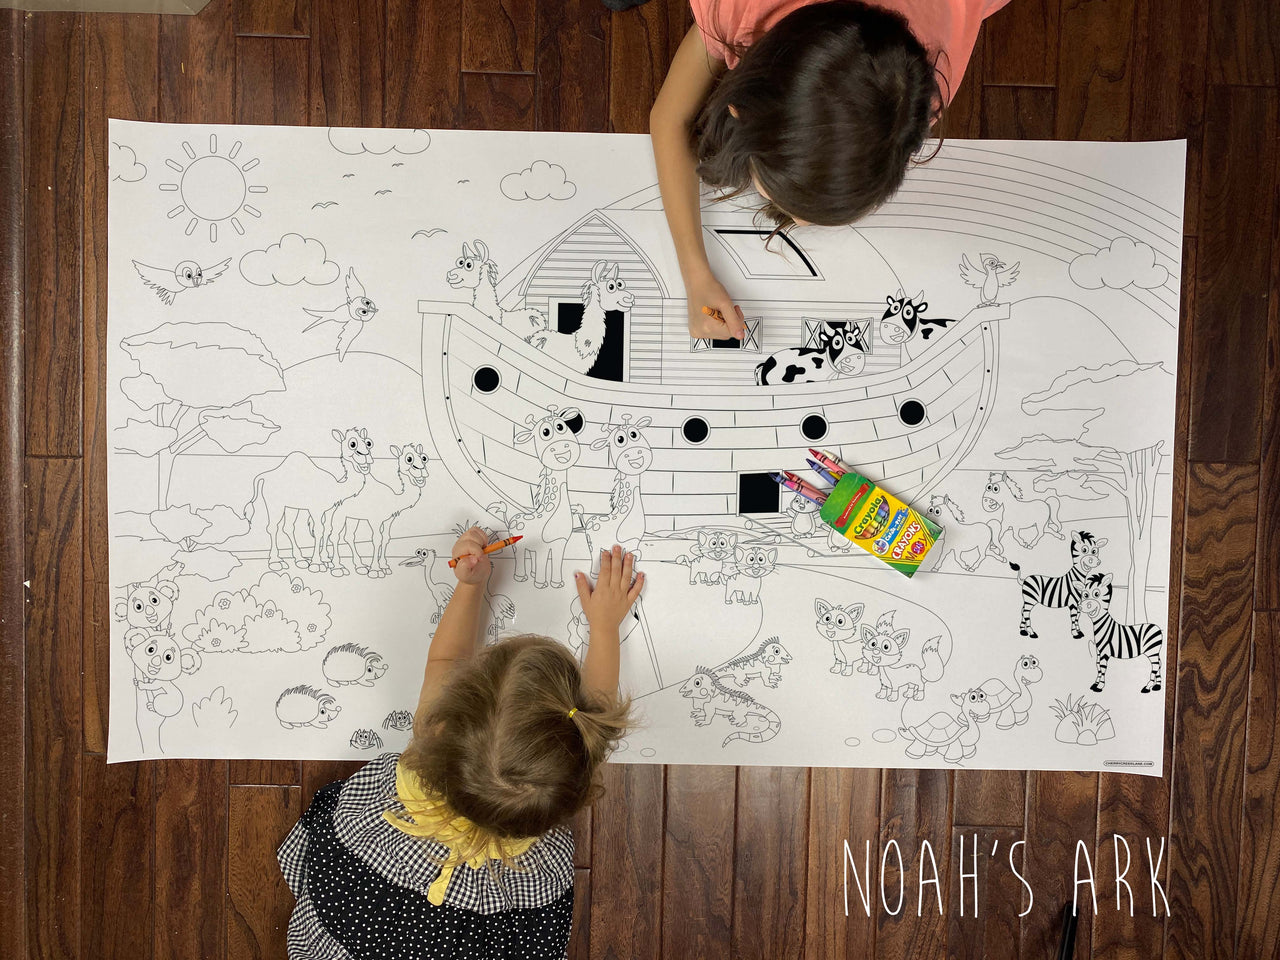 Noah's Ark Table Size Coloring Sheet